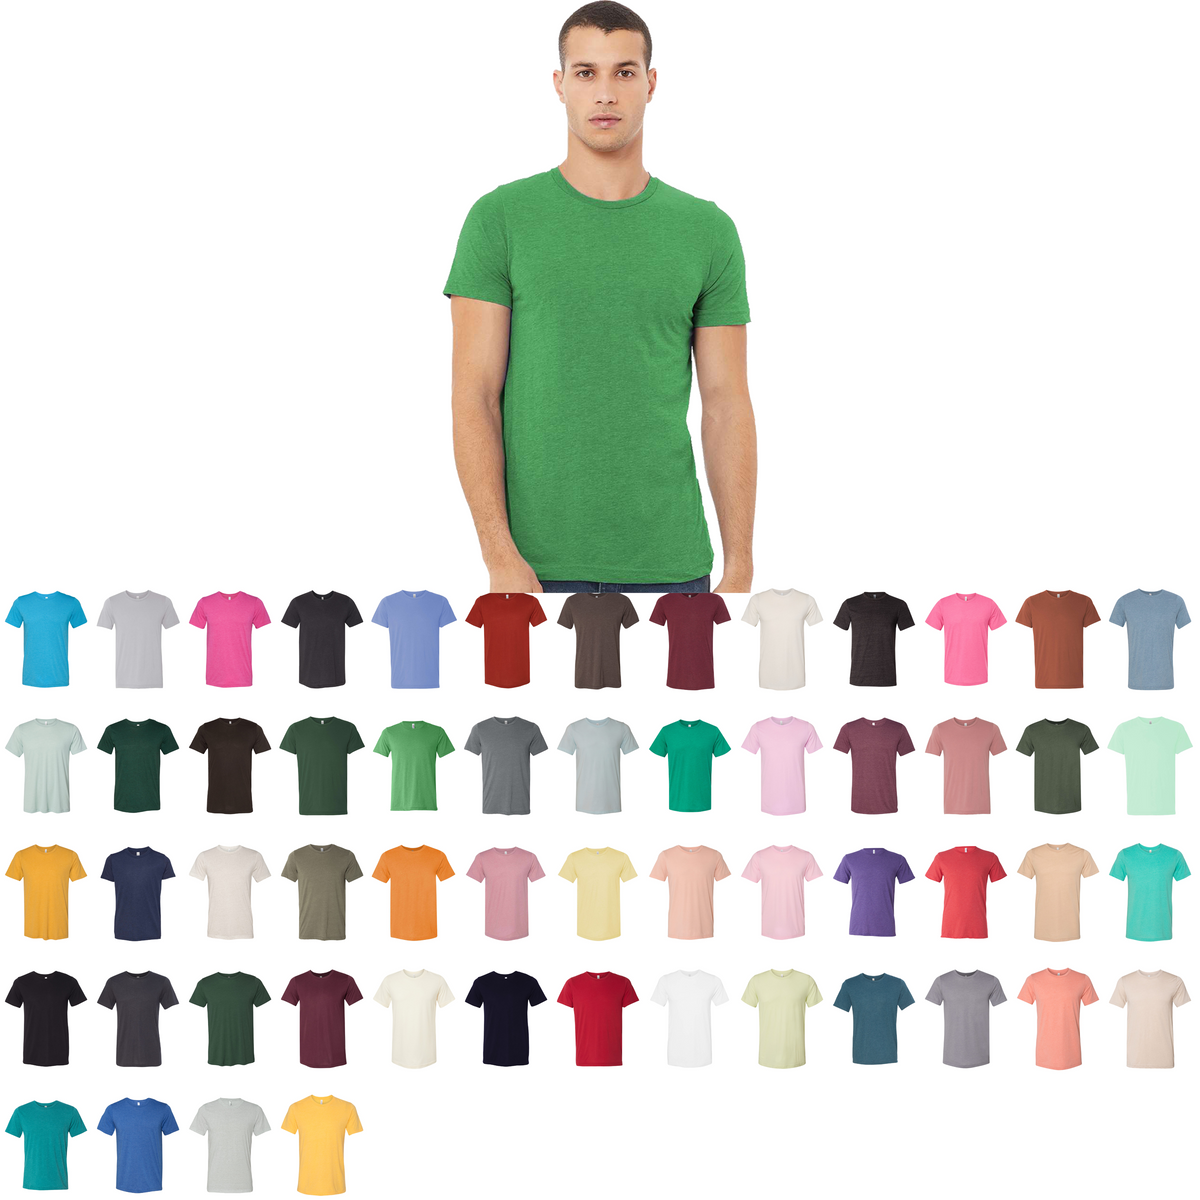 Plain Pink Shirt, Blank Pink Shirt, Bulk Shirts, Plain Shirts, Blank  Shirts, Soft Shirts, Shirts For Vinyl Printing